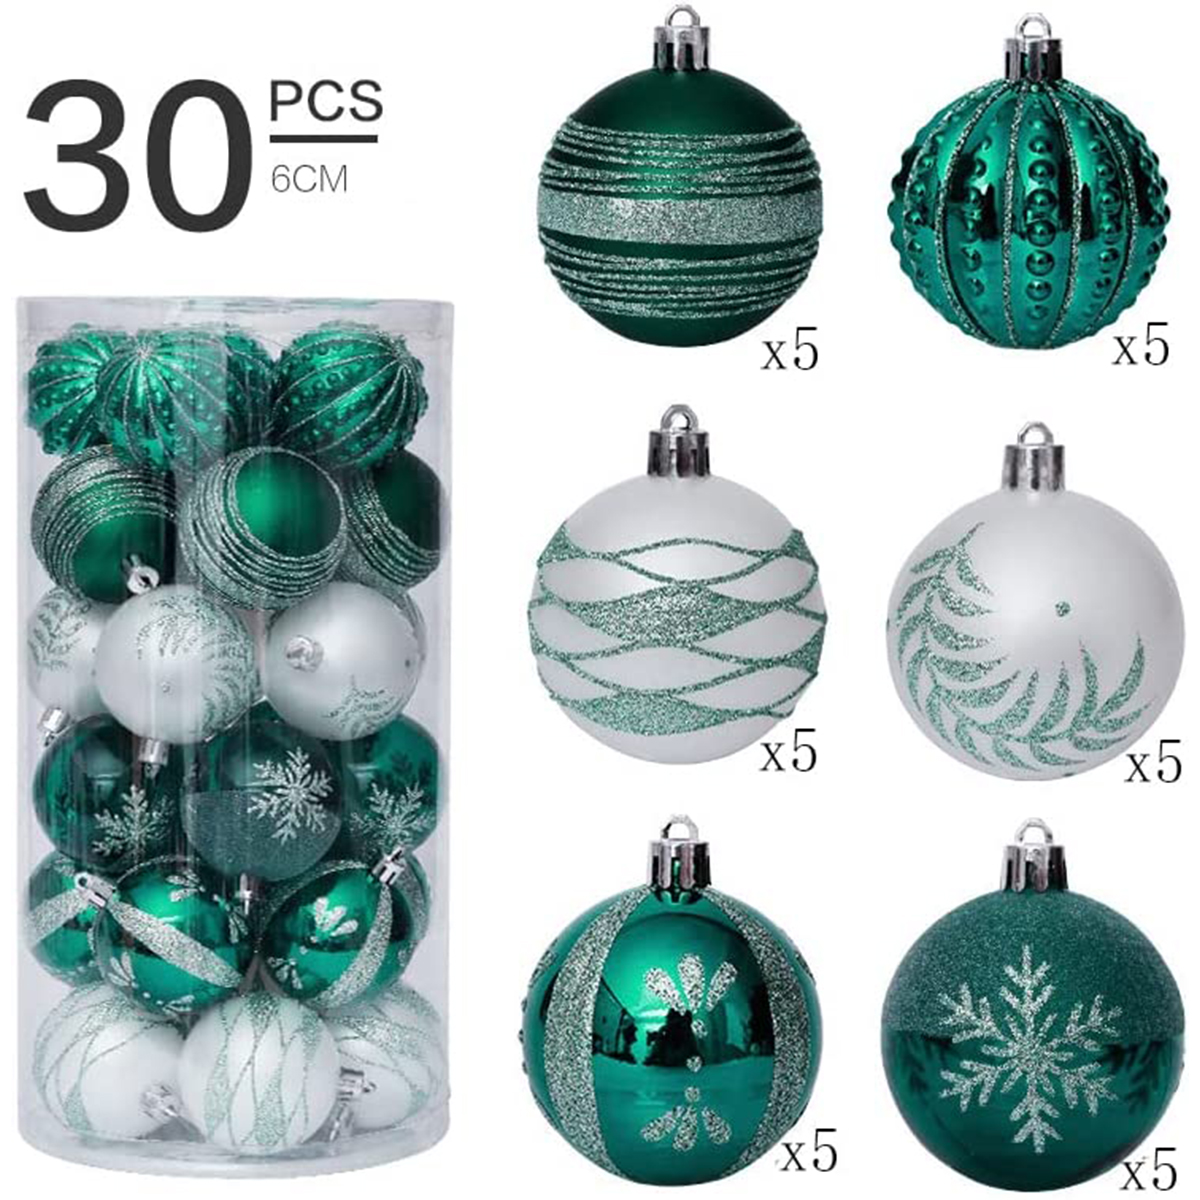 30 Pcs Painting Shatterproof Christmas Ball 6CM,Teal Mix